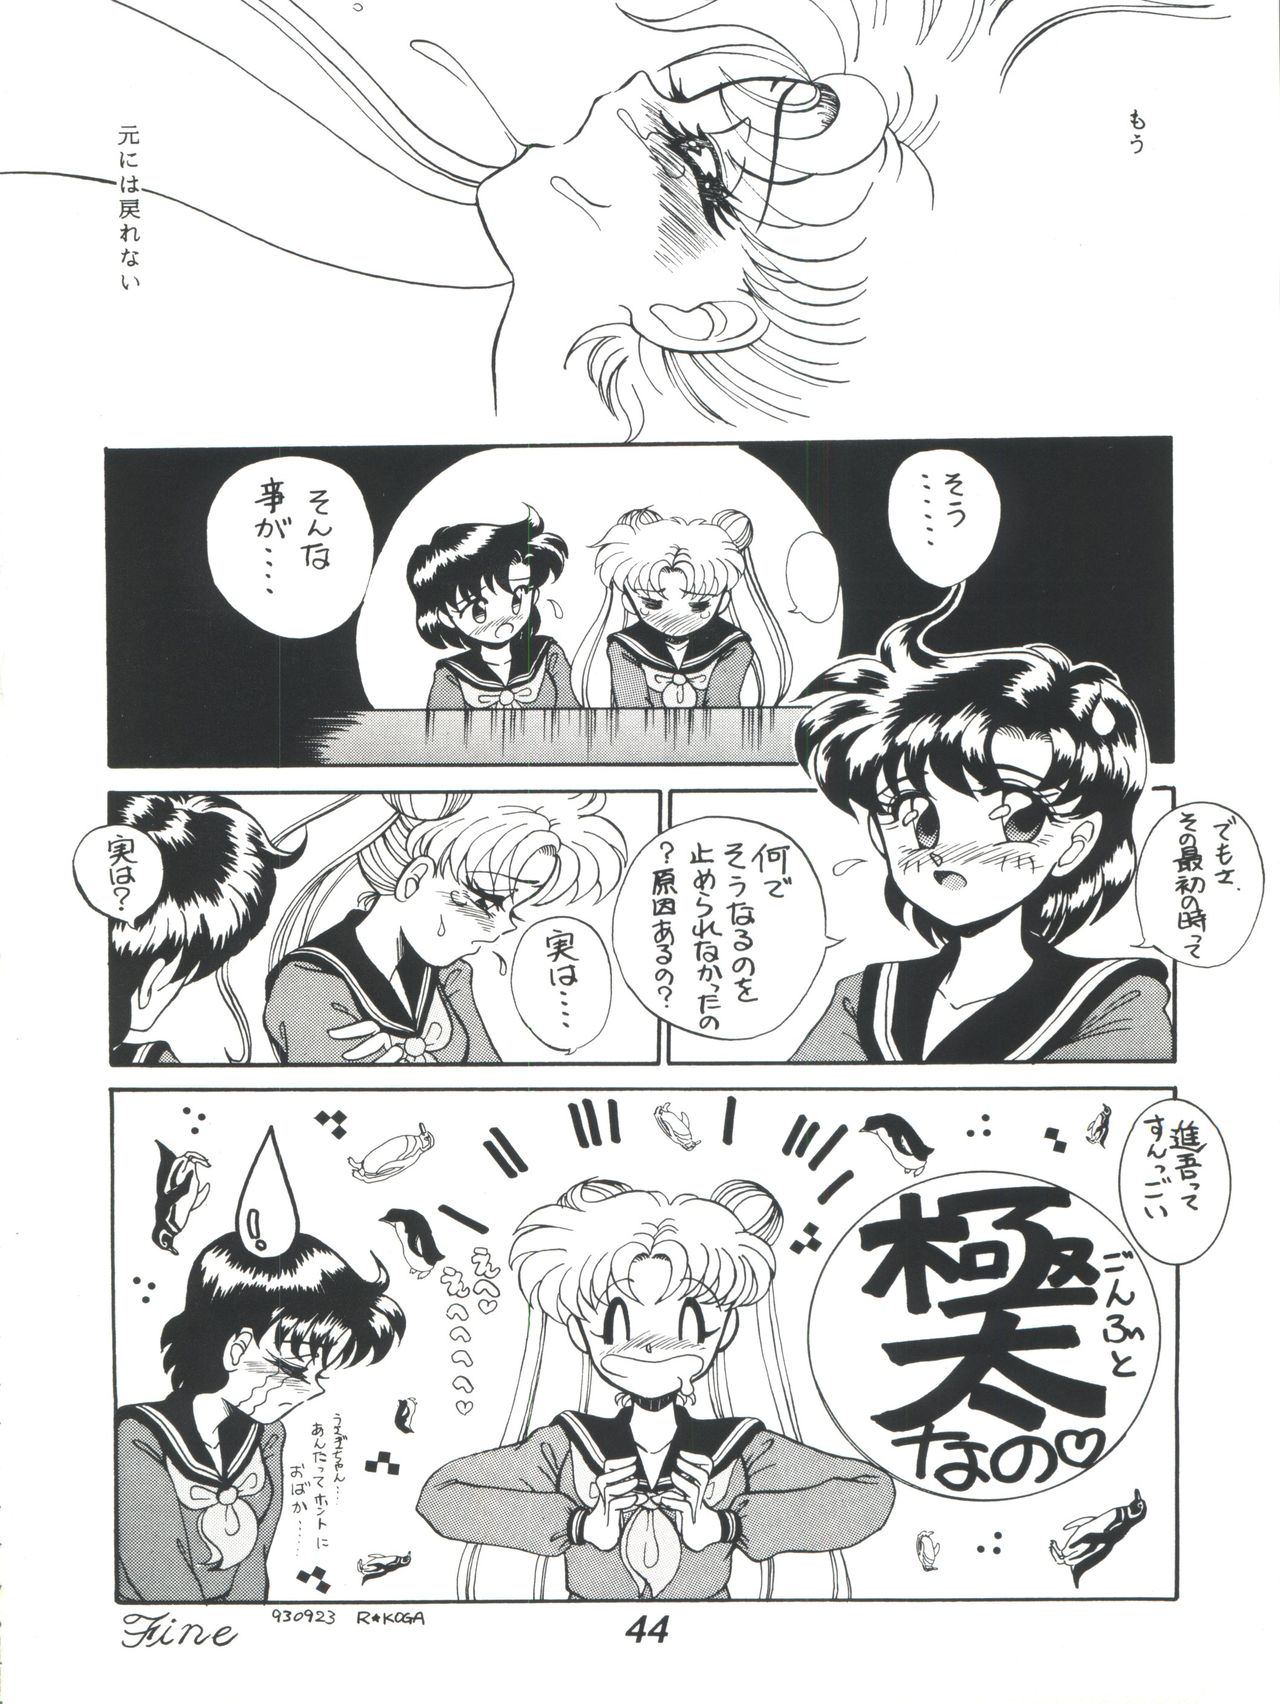 [Tenny Le Tai (R-Koga)] R Time Special (3x3 Eyes, Ranma 1/2, Sailor Moon) [テニーレ隊 (R・古賀)] R TIME SPESIAL R古賀個人作品集5 (3×3 EYES, らんま 1/2, 美少女戦士セーラームーン)